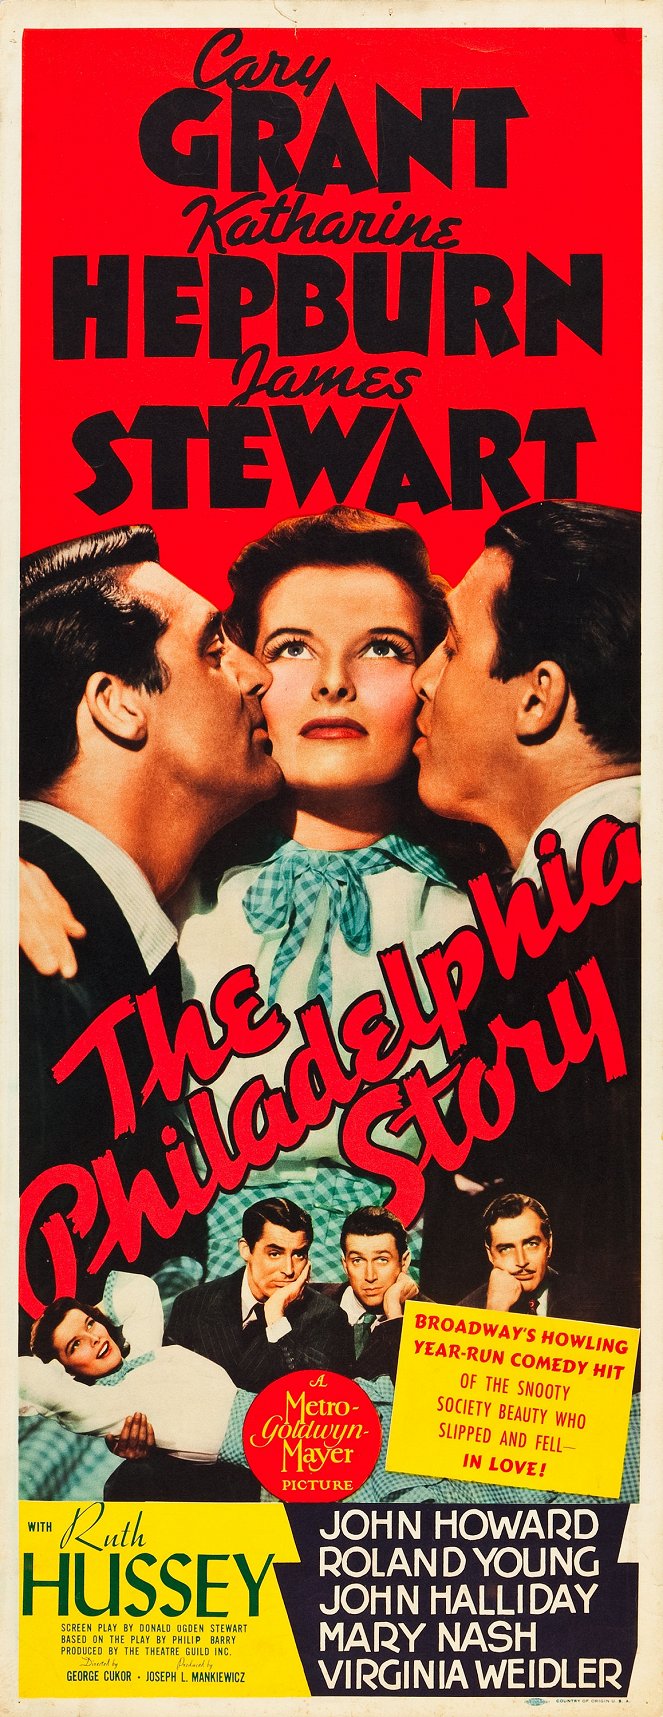 Philadelphiai történet - Plakátok